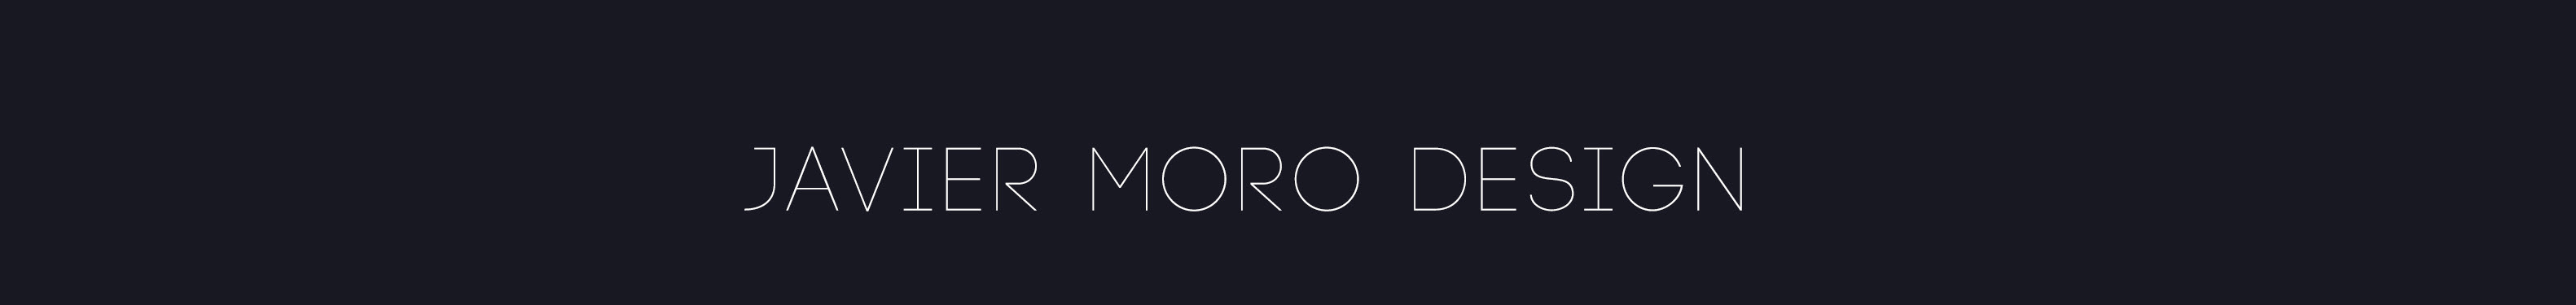 Javier Moro's profile banner